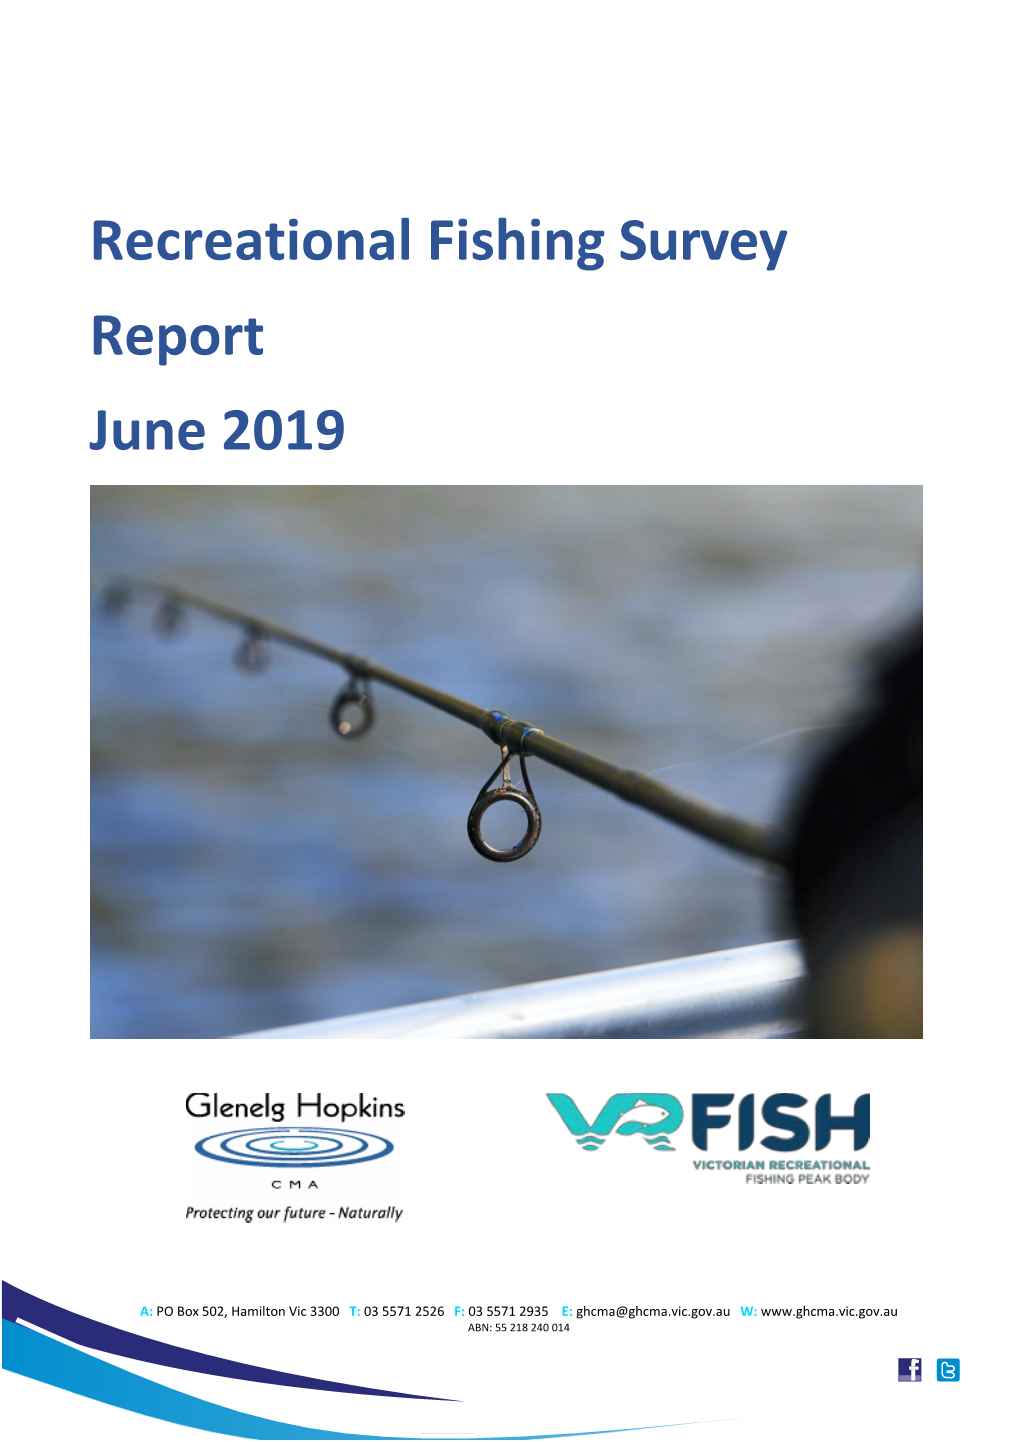 Recreational Fishing Survey Report June 2019